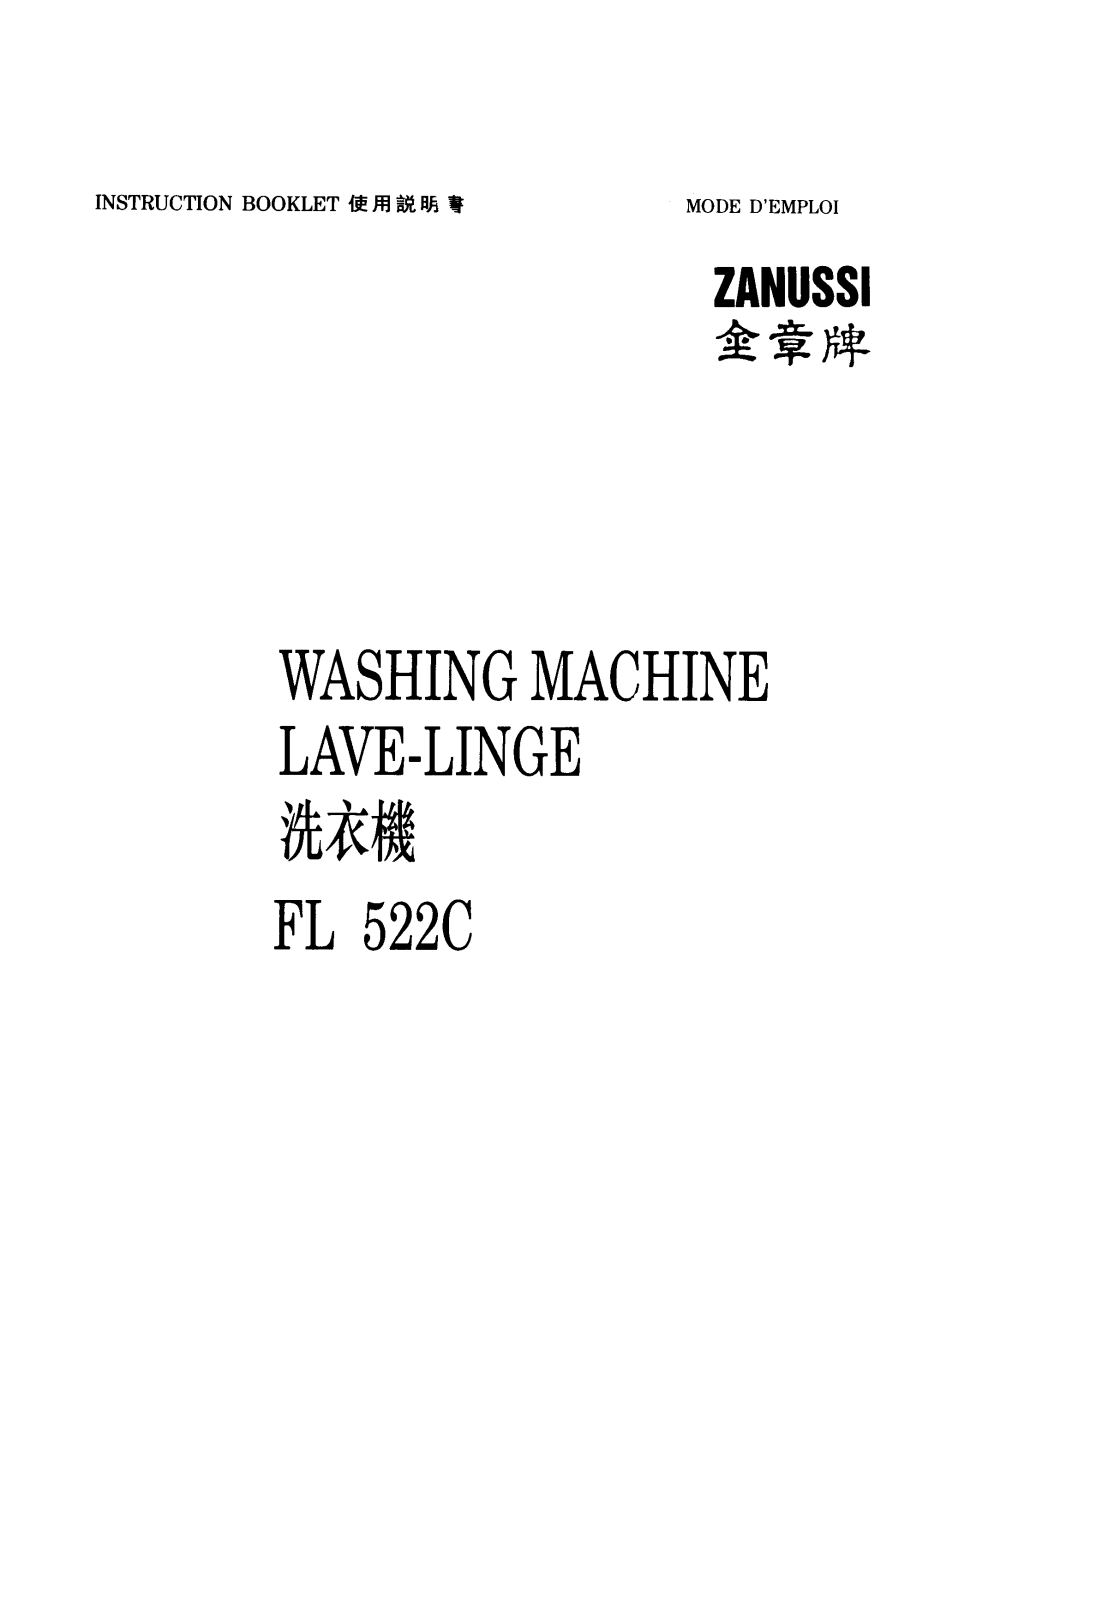 Zanussi FL522C User Manual